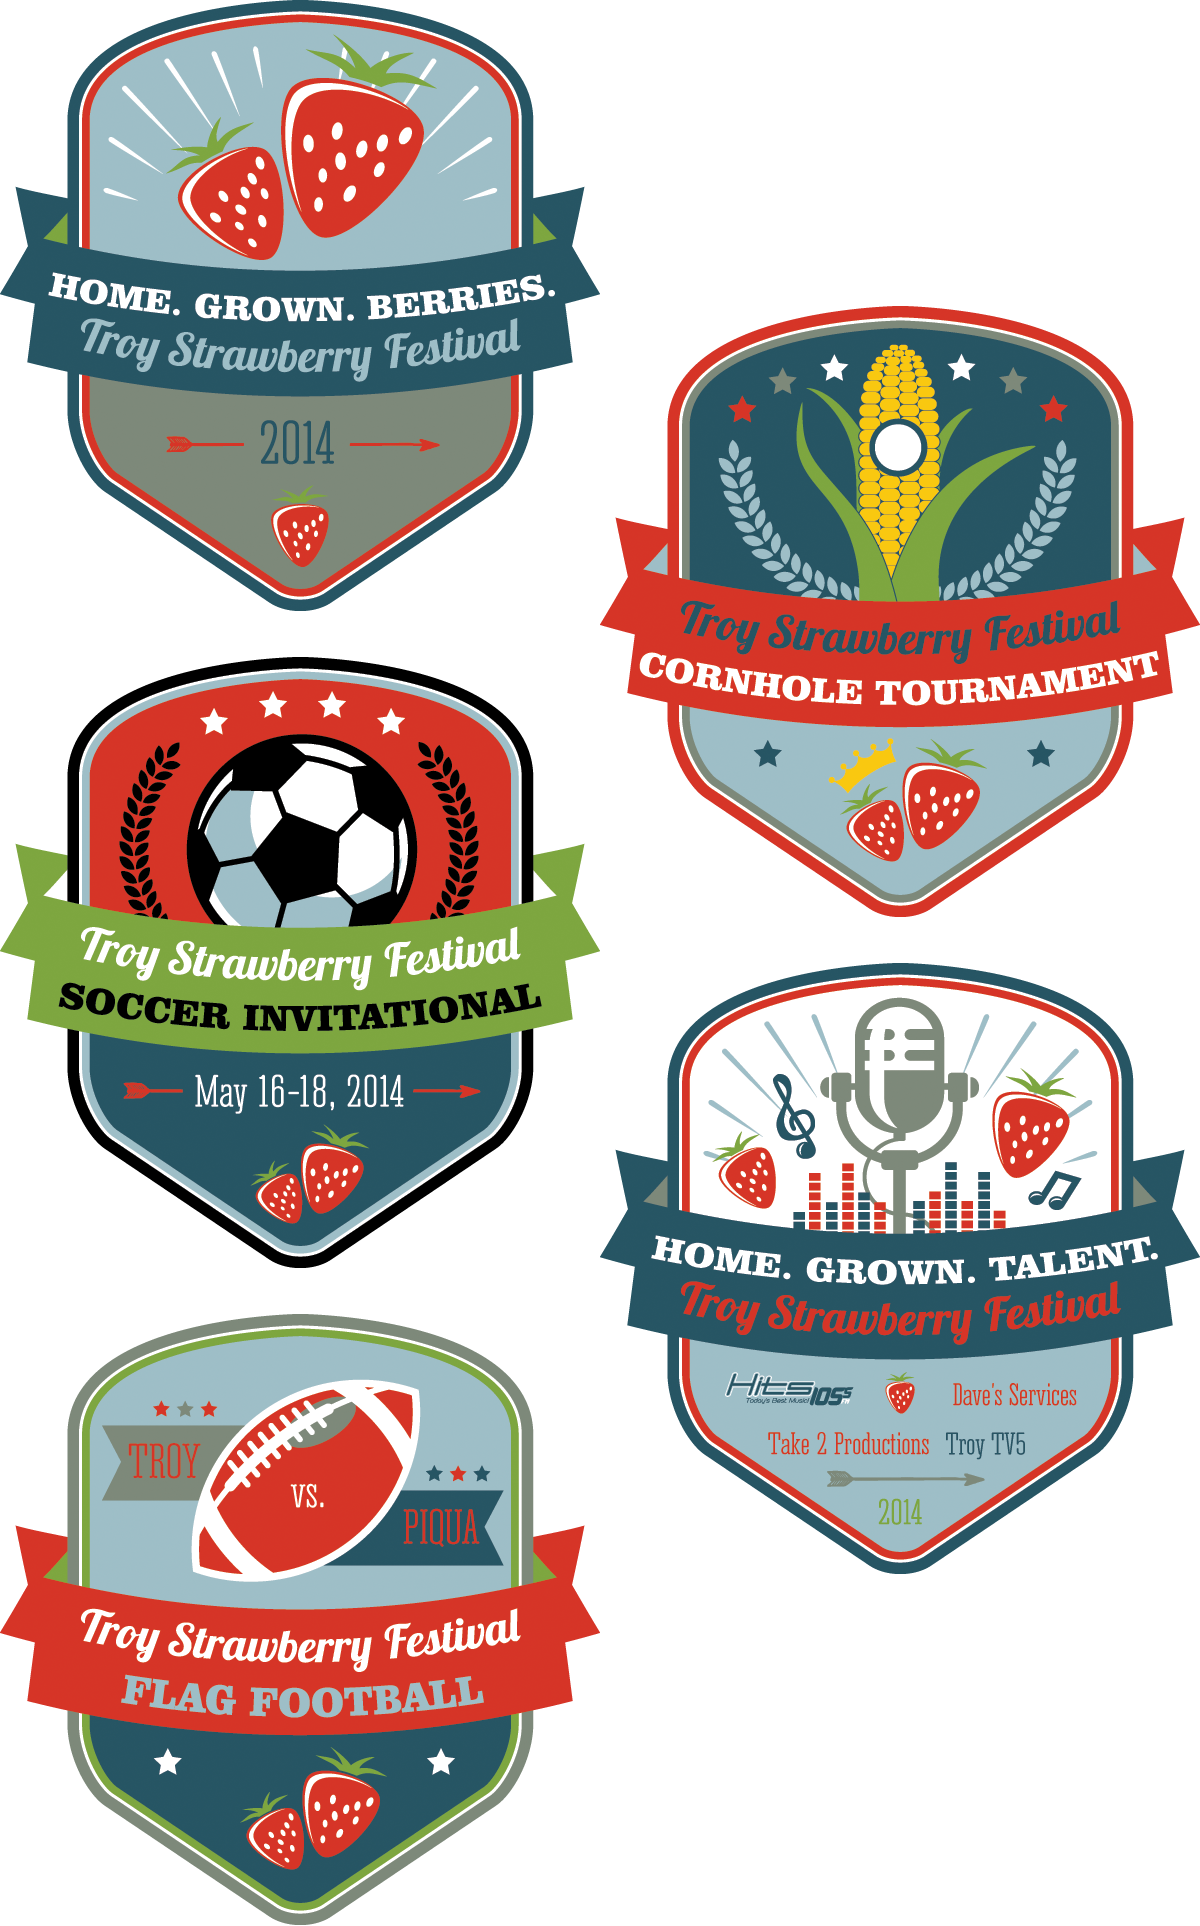 2014 Troy Strawberry Festival logos